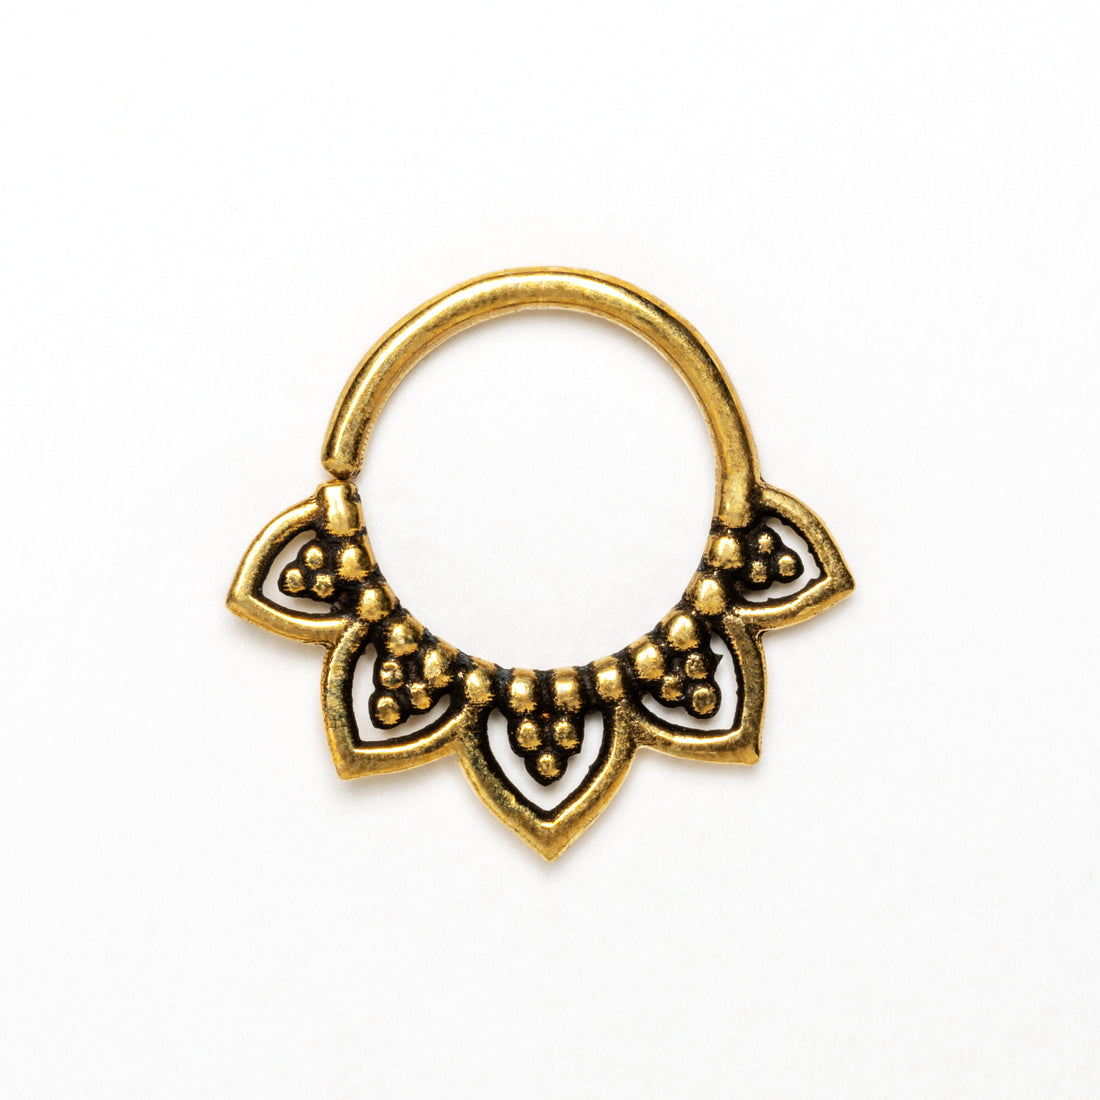 Iriya golden brass open lotus shape septum ring frontal view